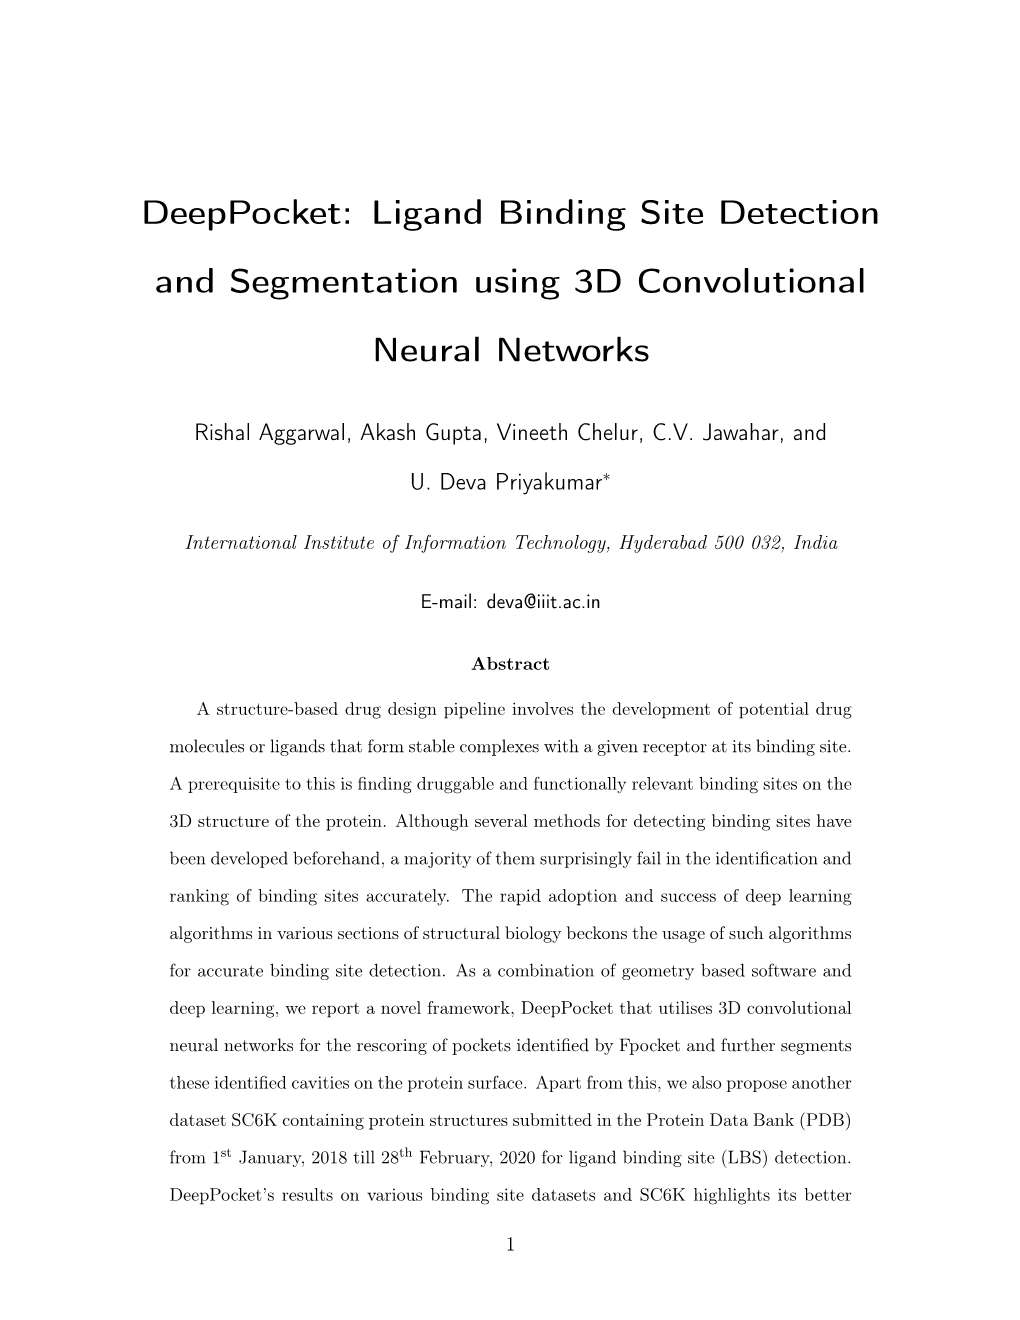 Deeppocket: Ligand Binding Site Detection and Segmentation Using 3D Convolutional Neural Networks